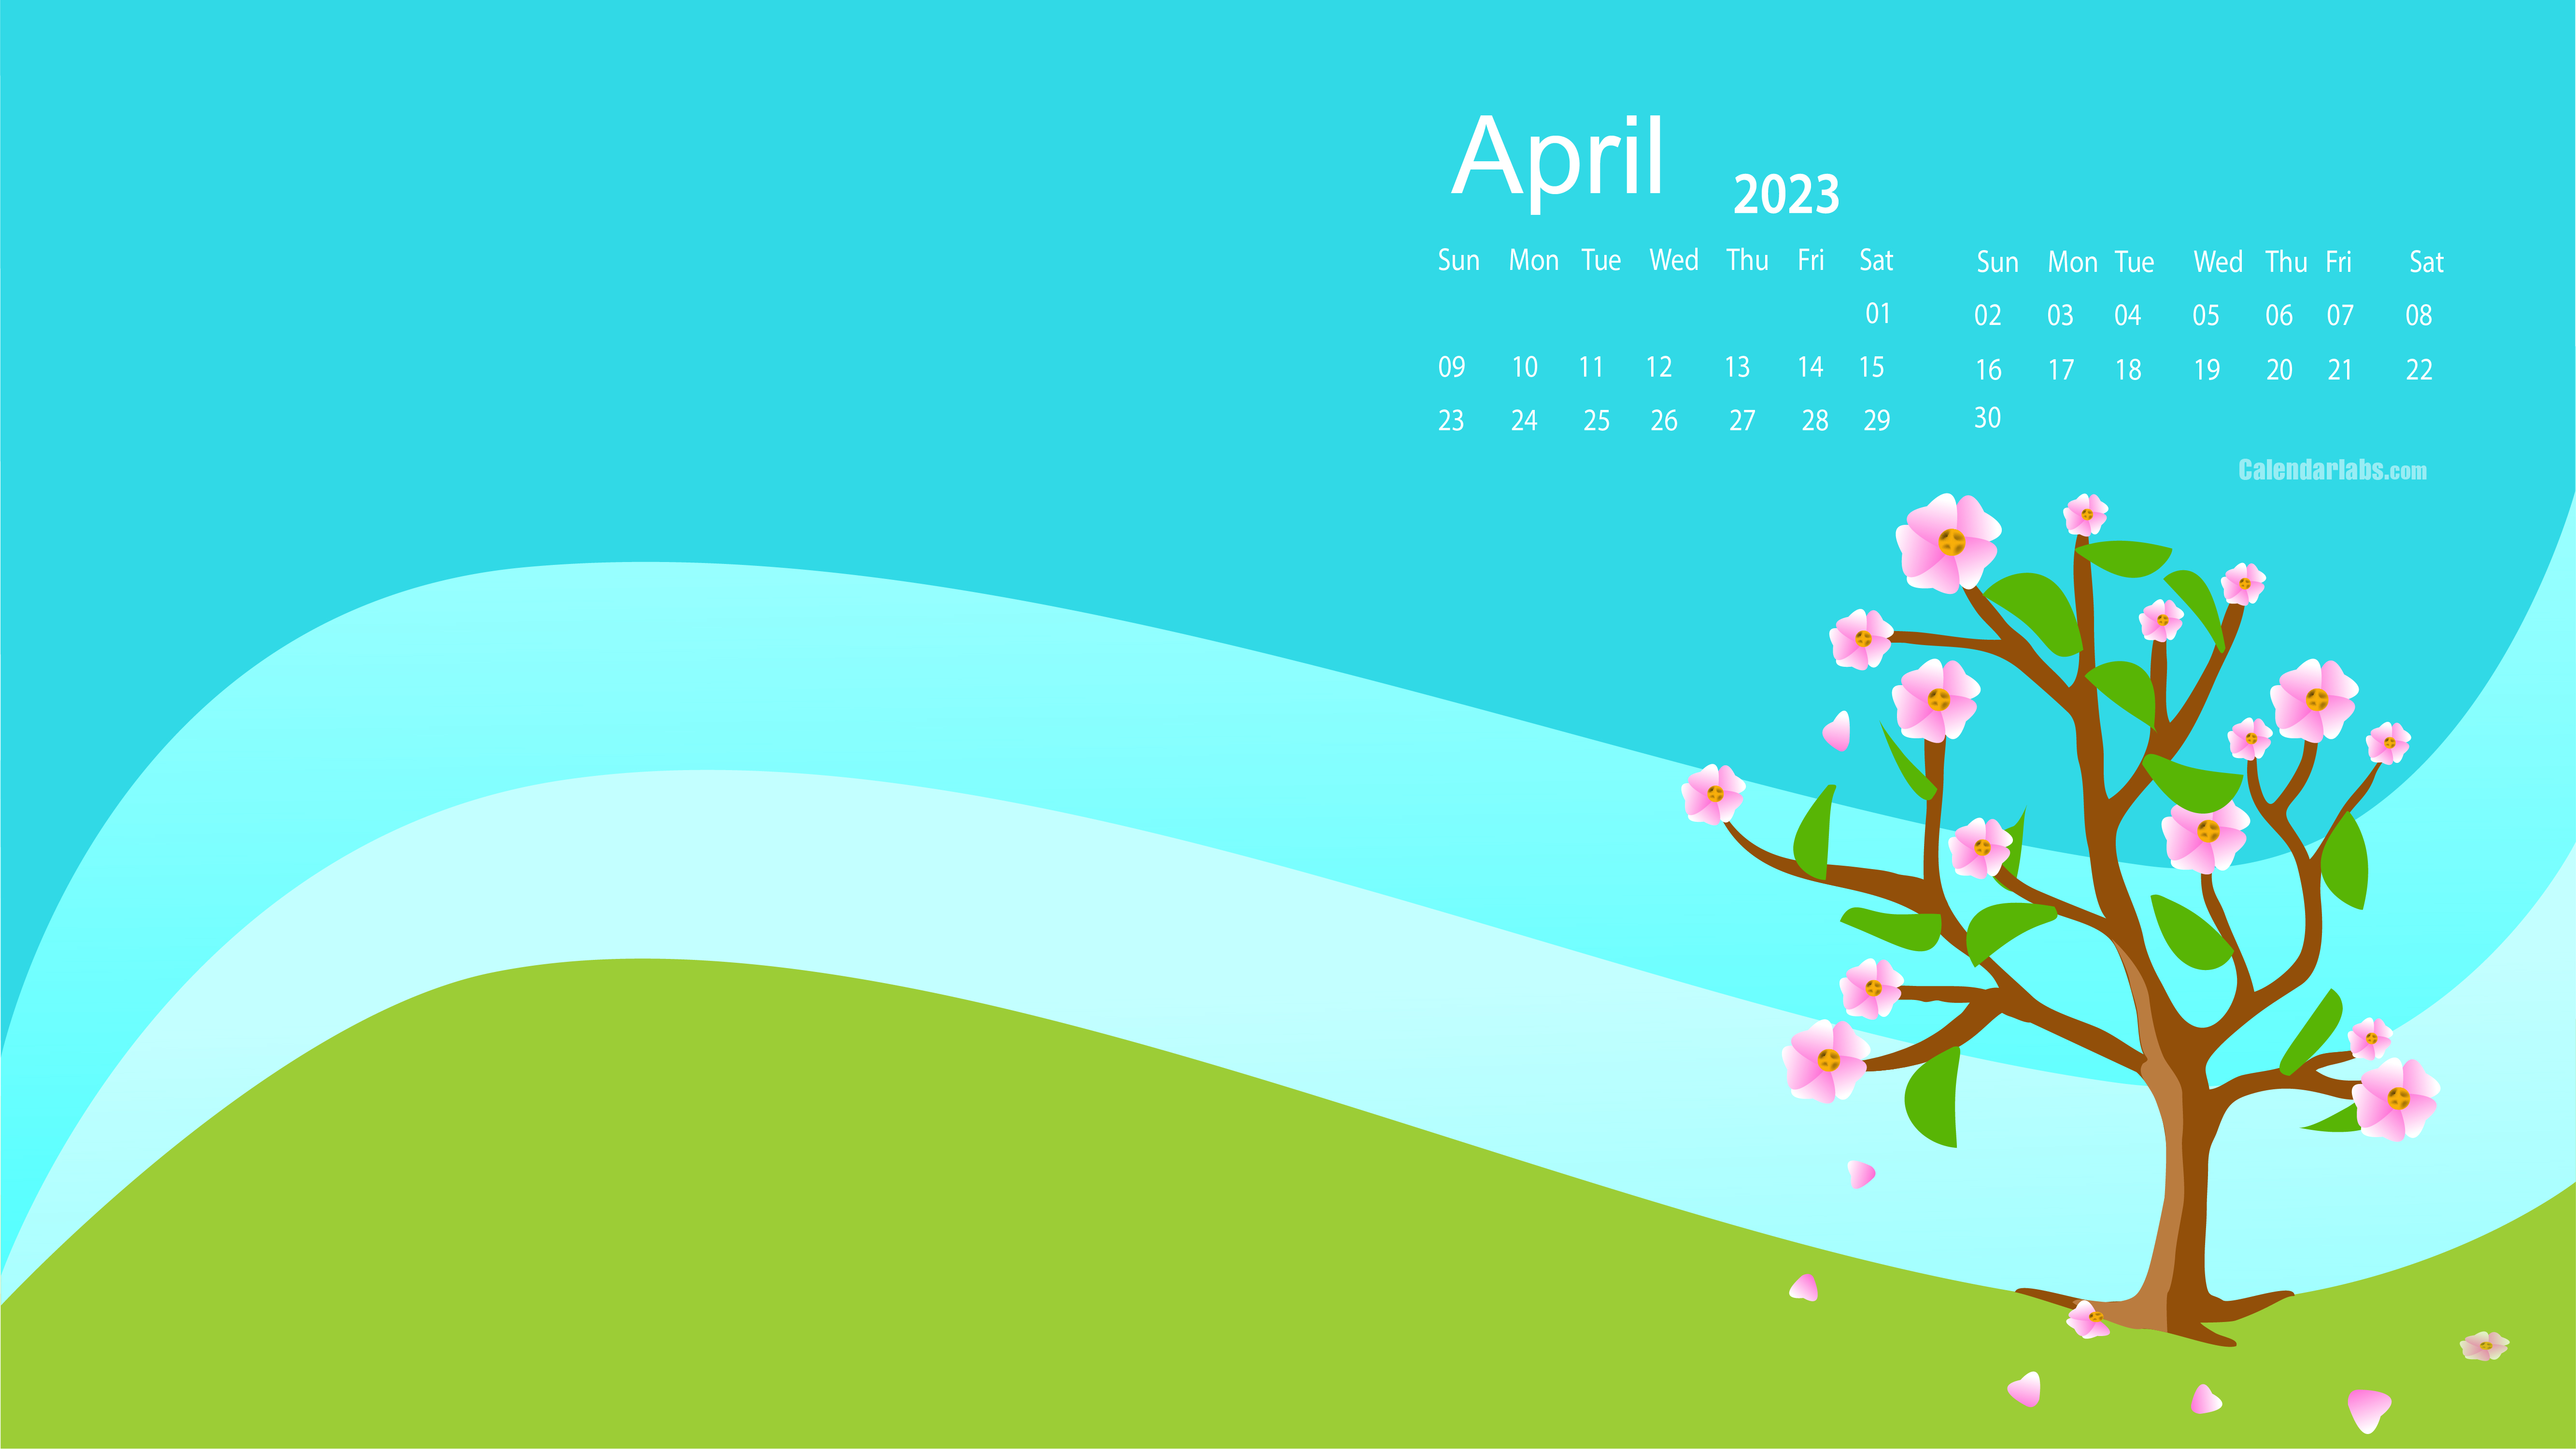 April 2023 wallpapers  55 FREEBIES for desktop  phones